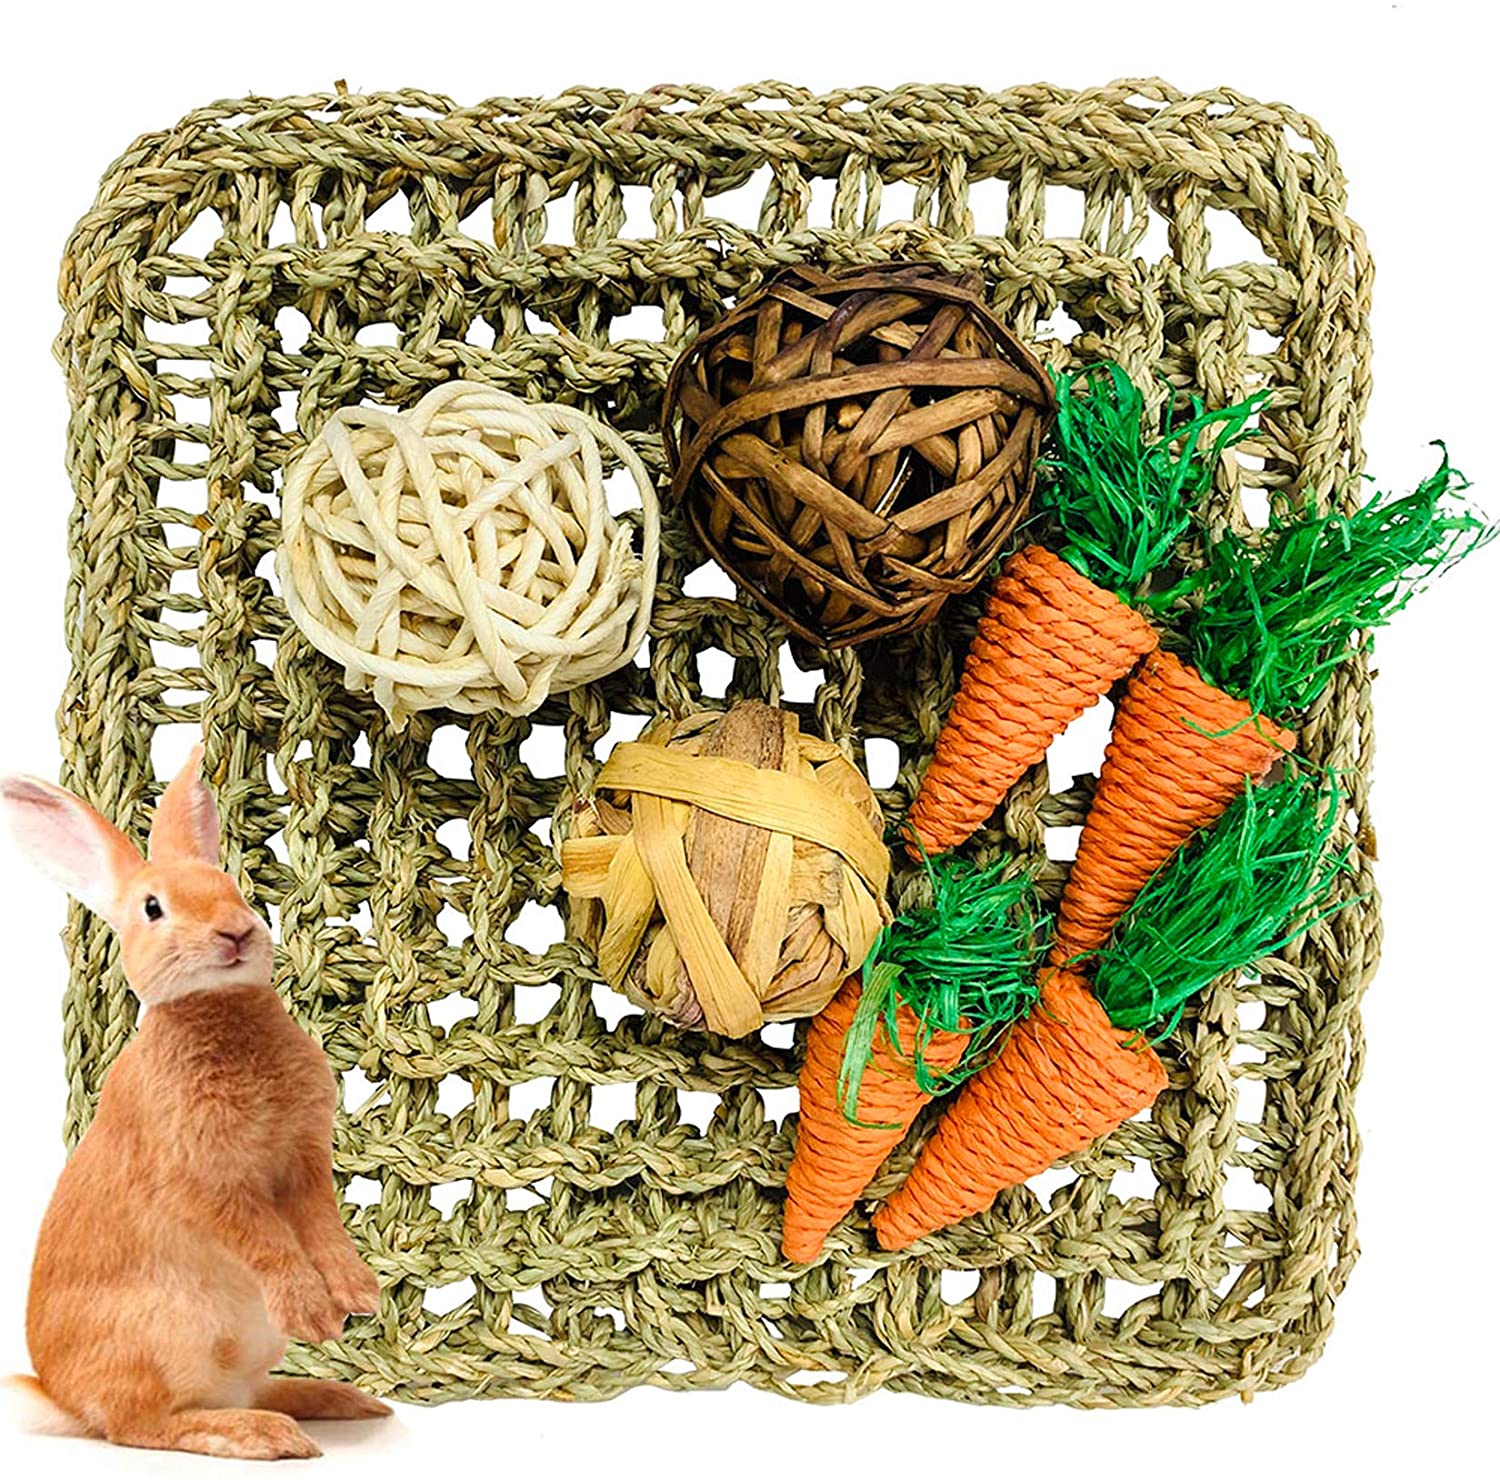 Hamiledyi Rabbit Bunny Chew Toys Rattan Grass Scratcher Climbing Tree Fun Tree Carrot Play Toys for Small Animal 